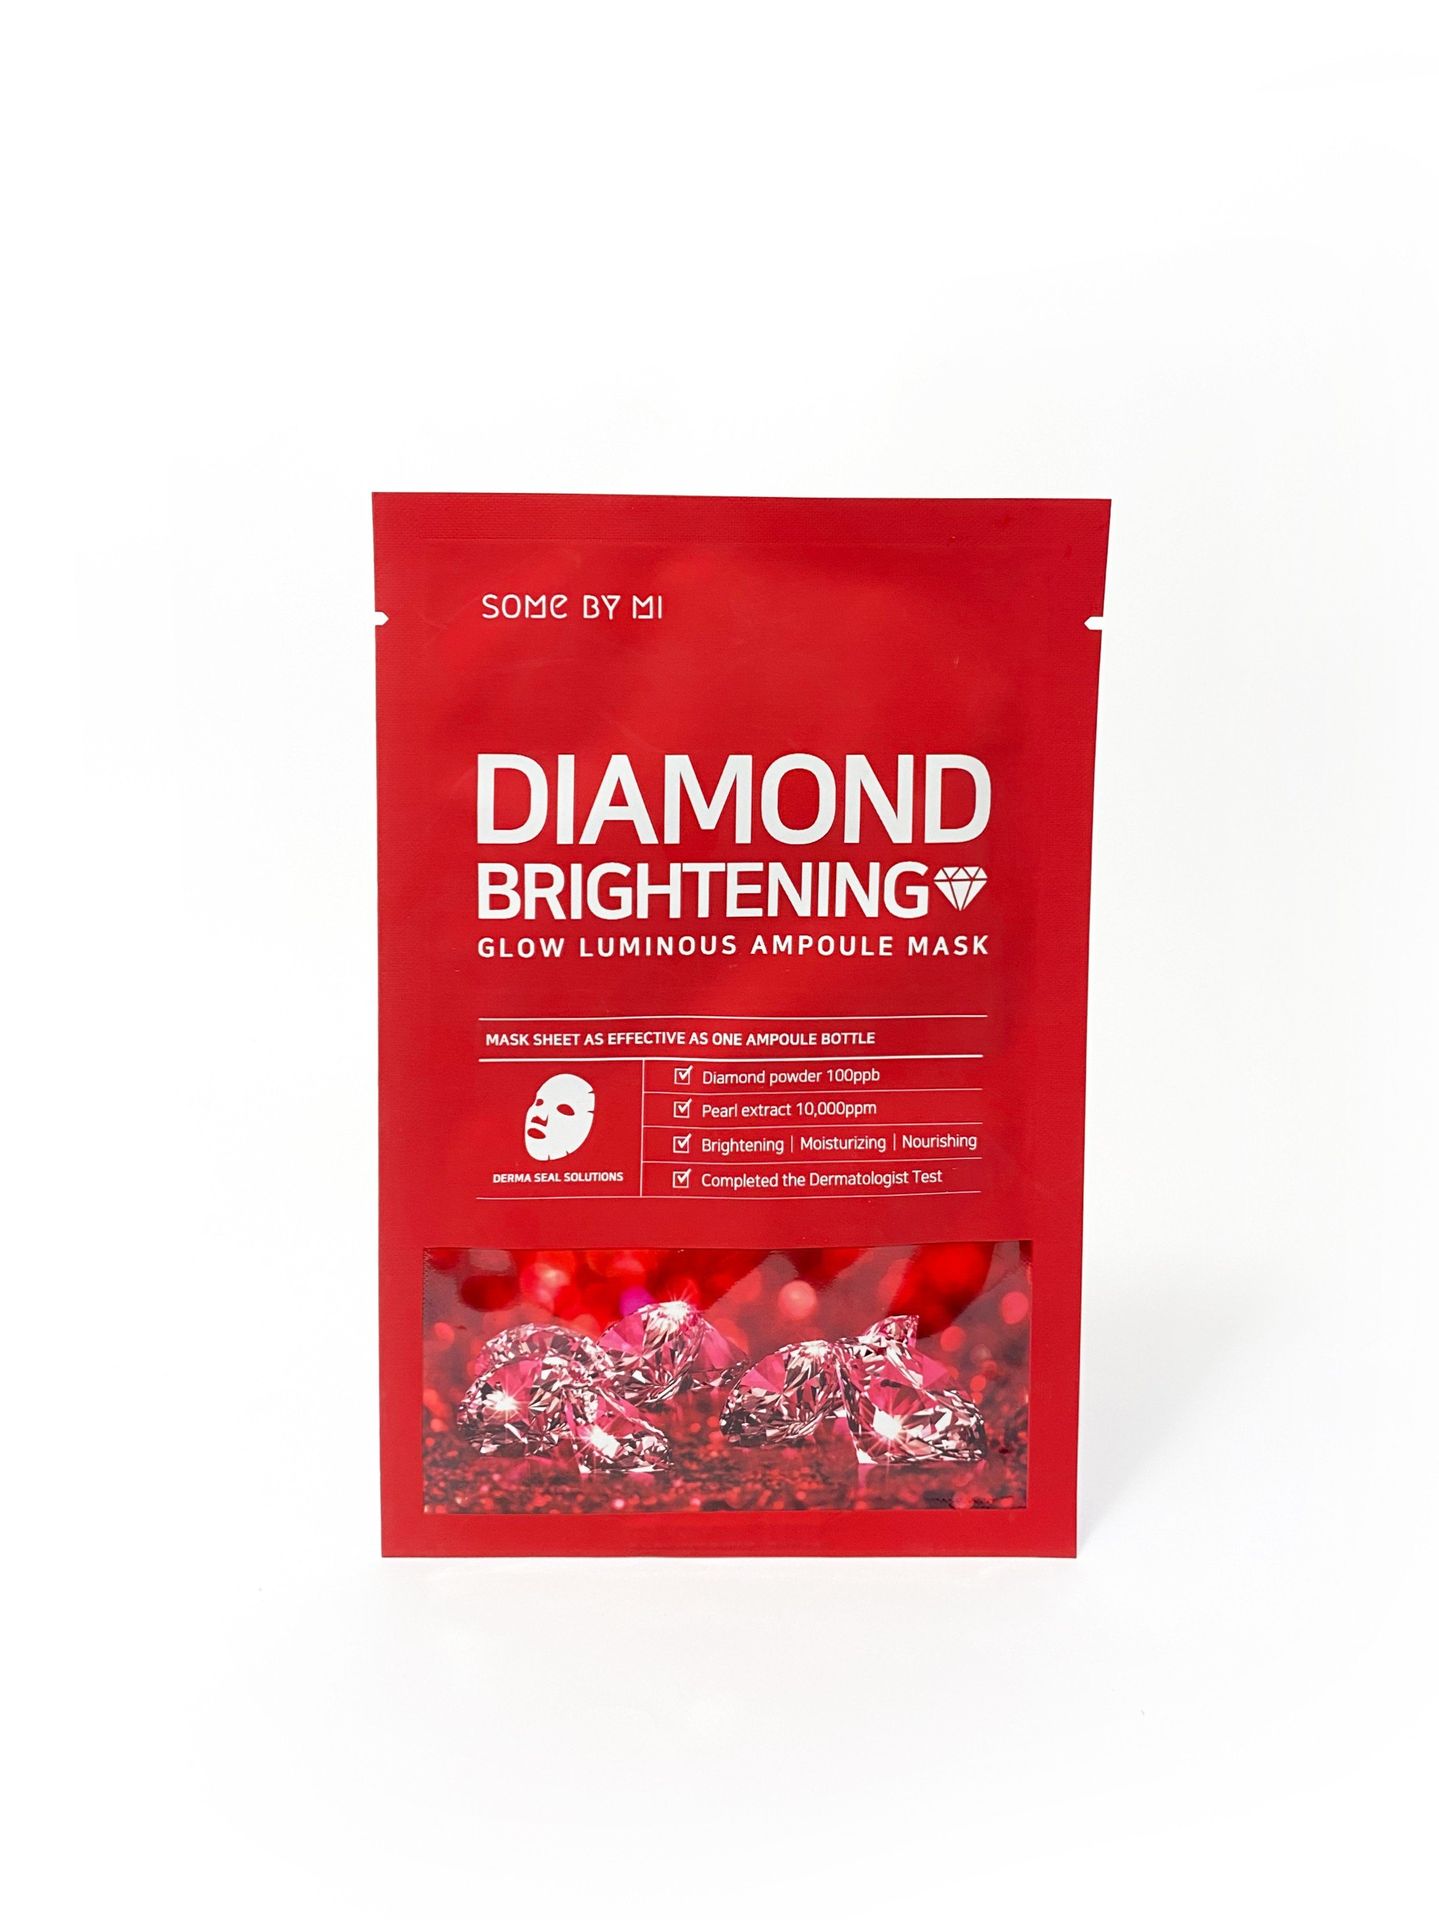 RED DIAMOND BRIGHTENING GLOW LUMINOUS AMPOULE MASK		